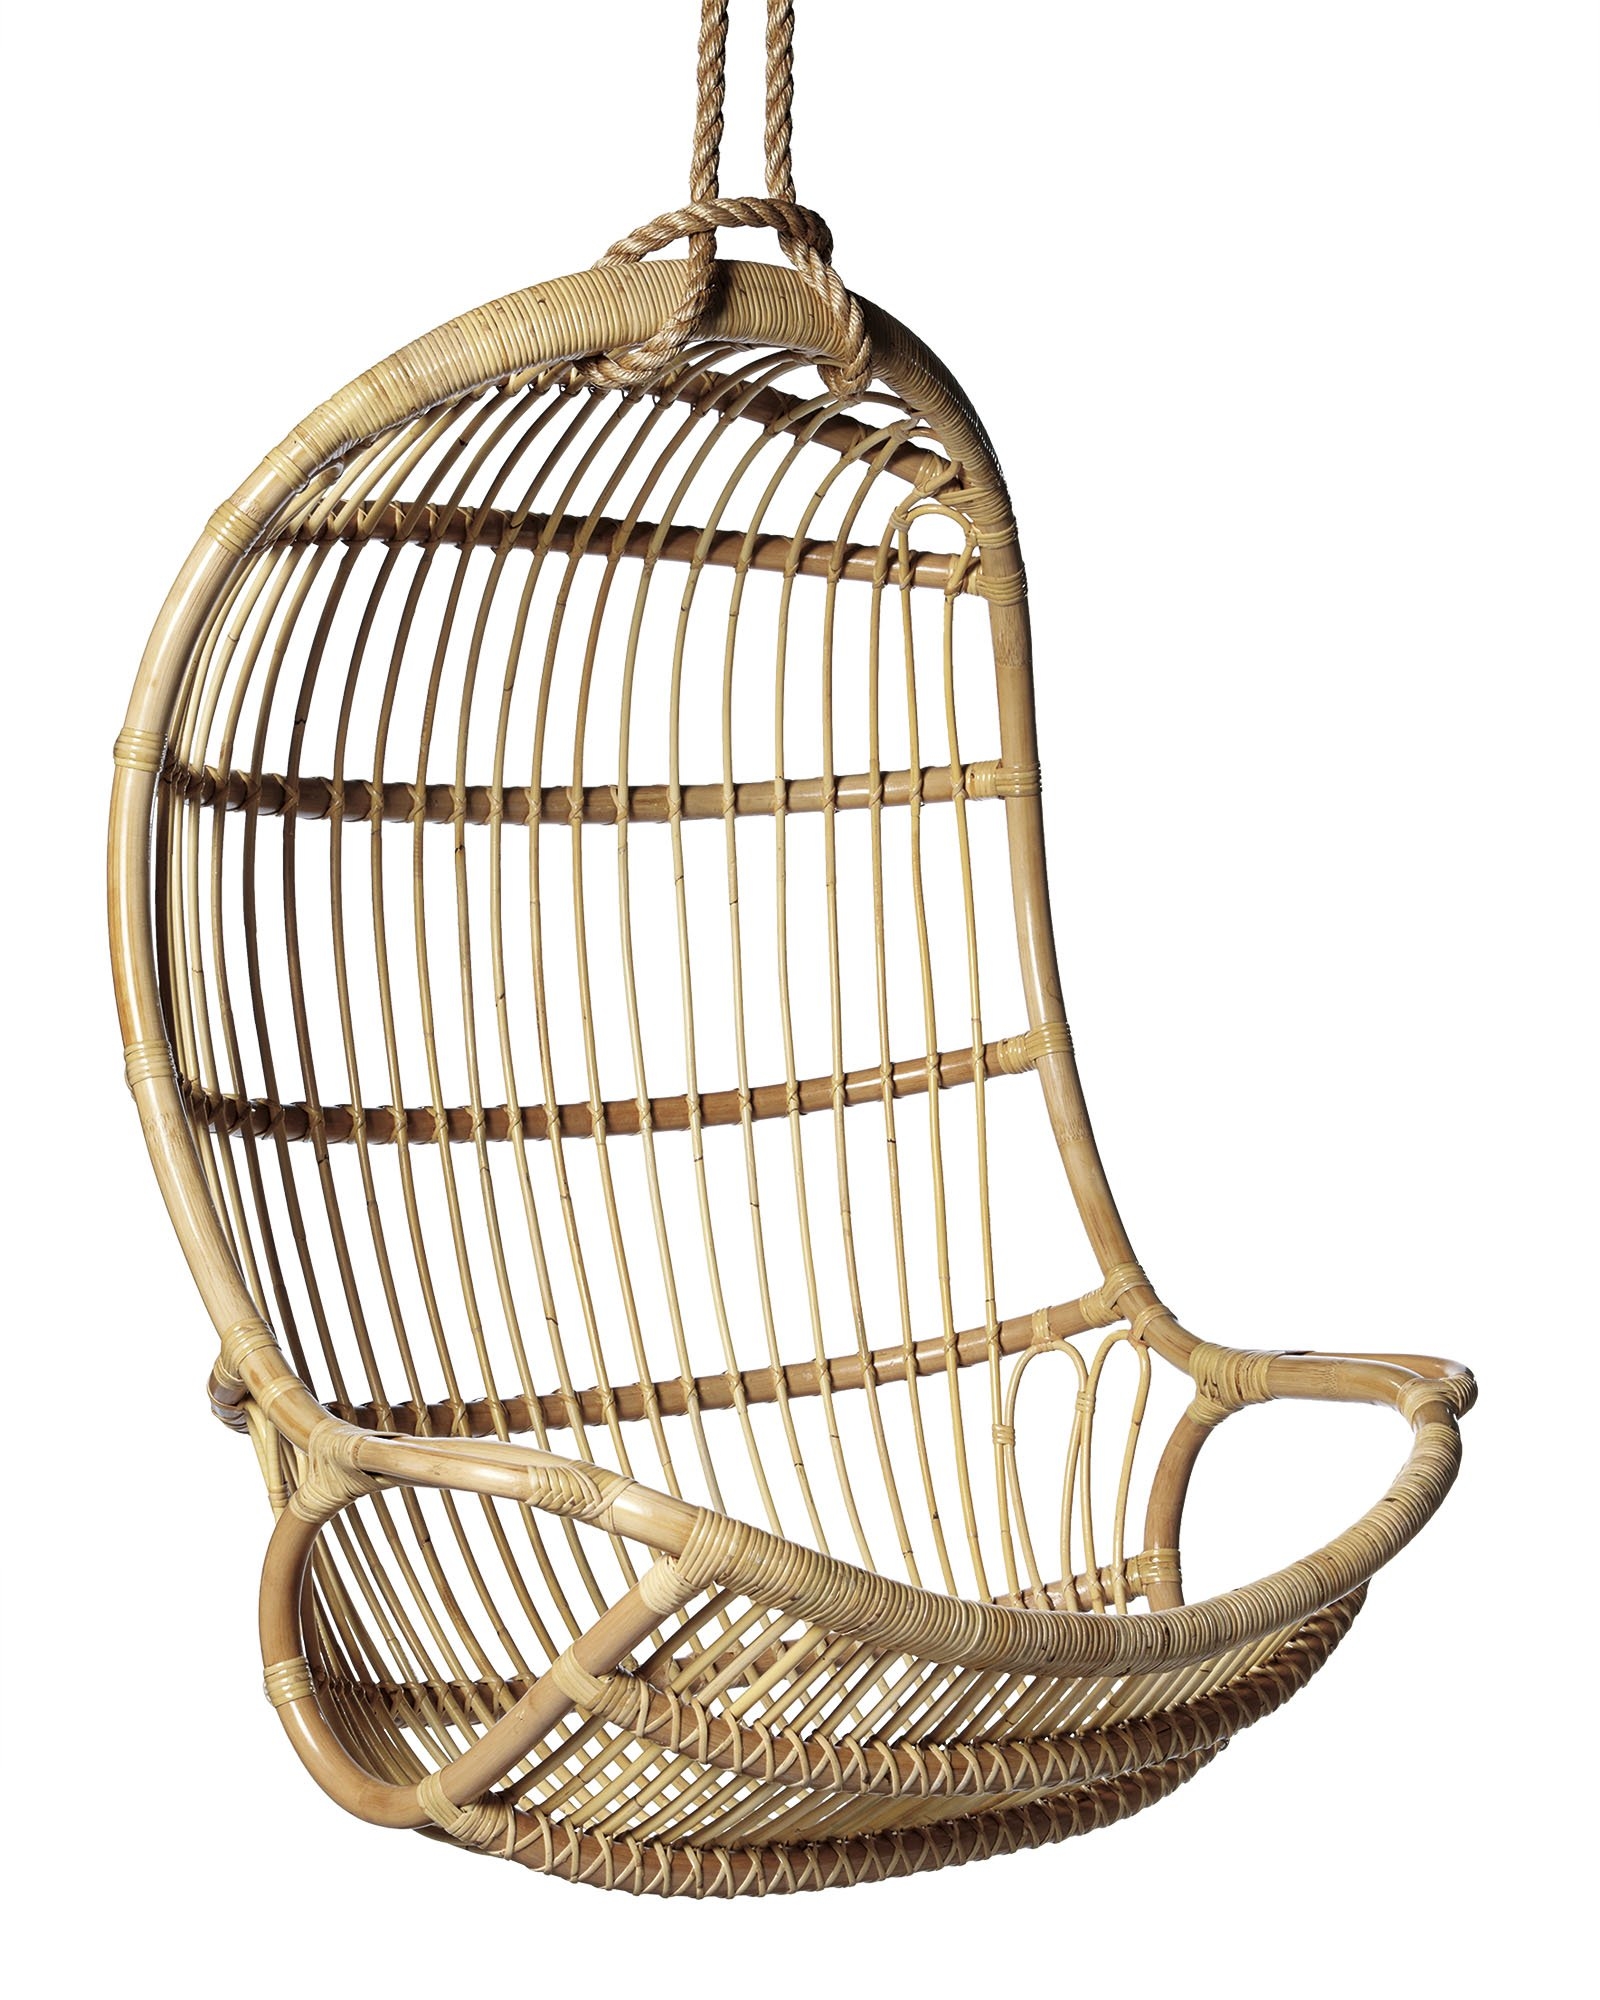 Hanging Rattan Chair - Natural - Image 3